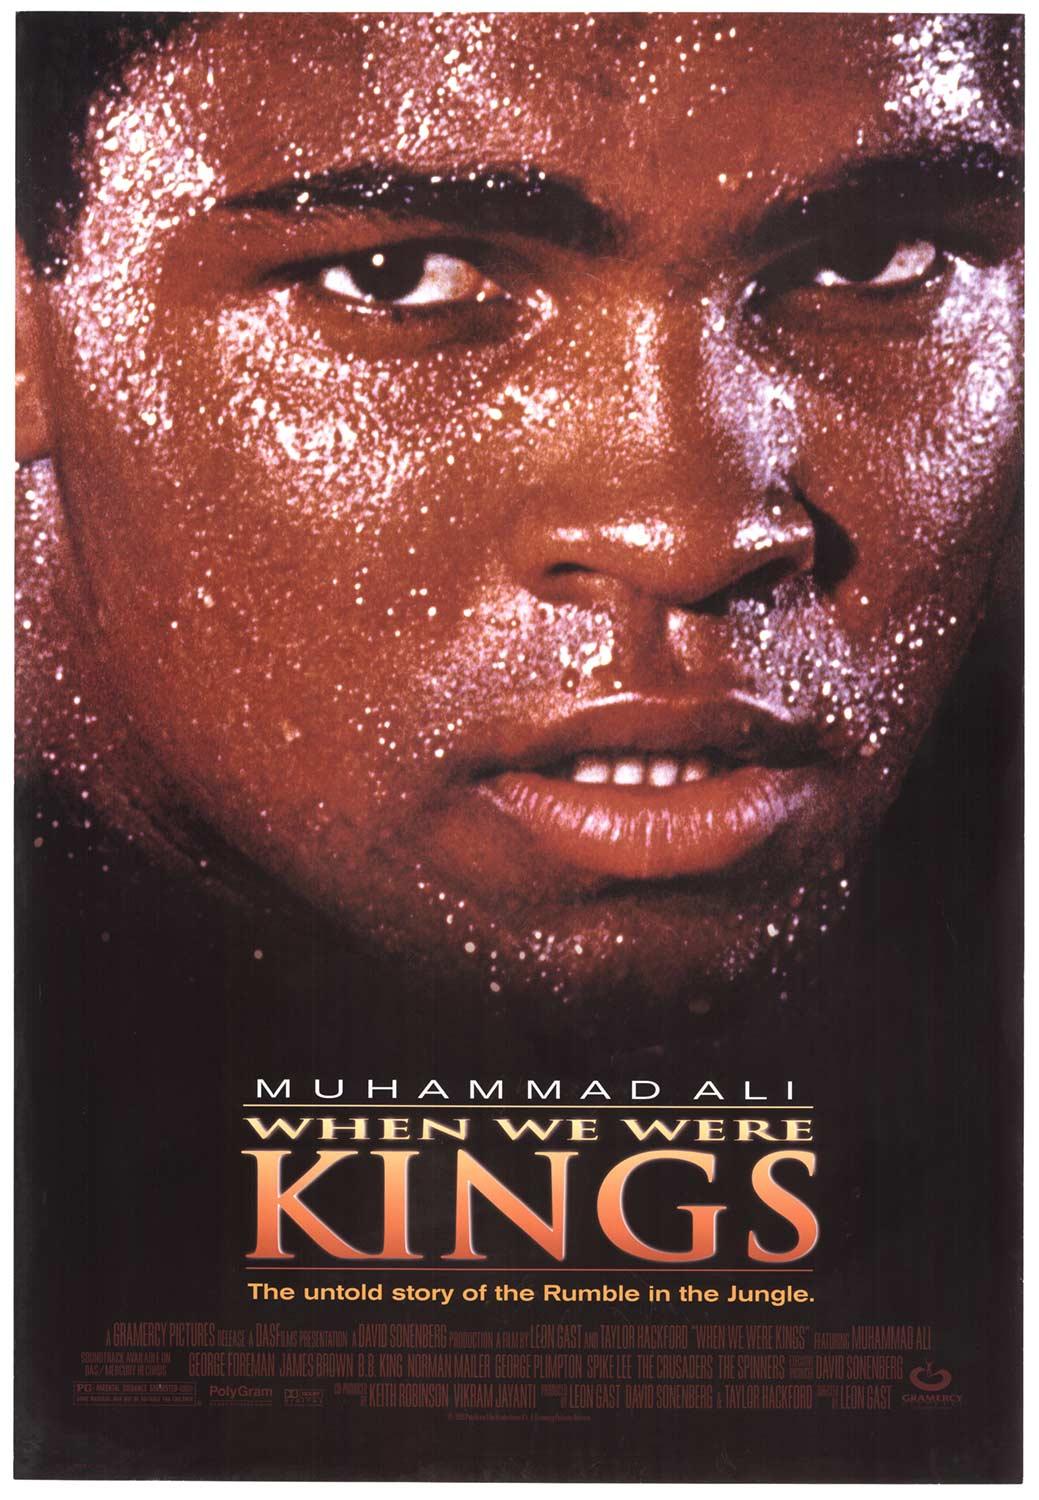 Unknown Portrait Print - 'When We Were Kings' - Muhammad  Ali original movie poster